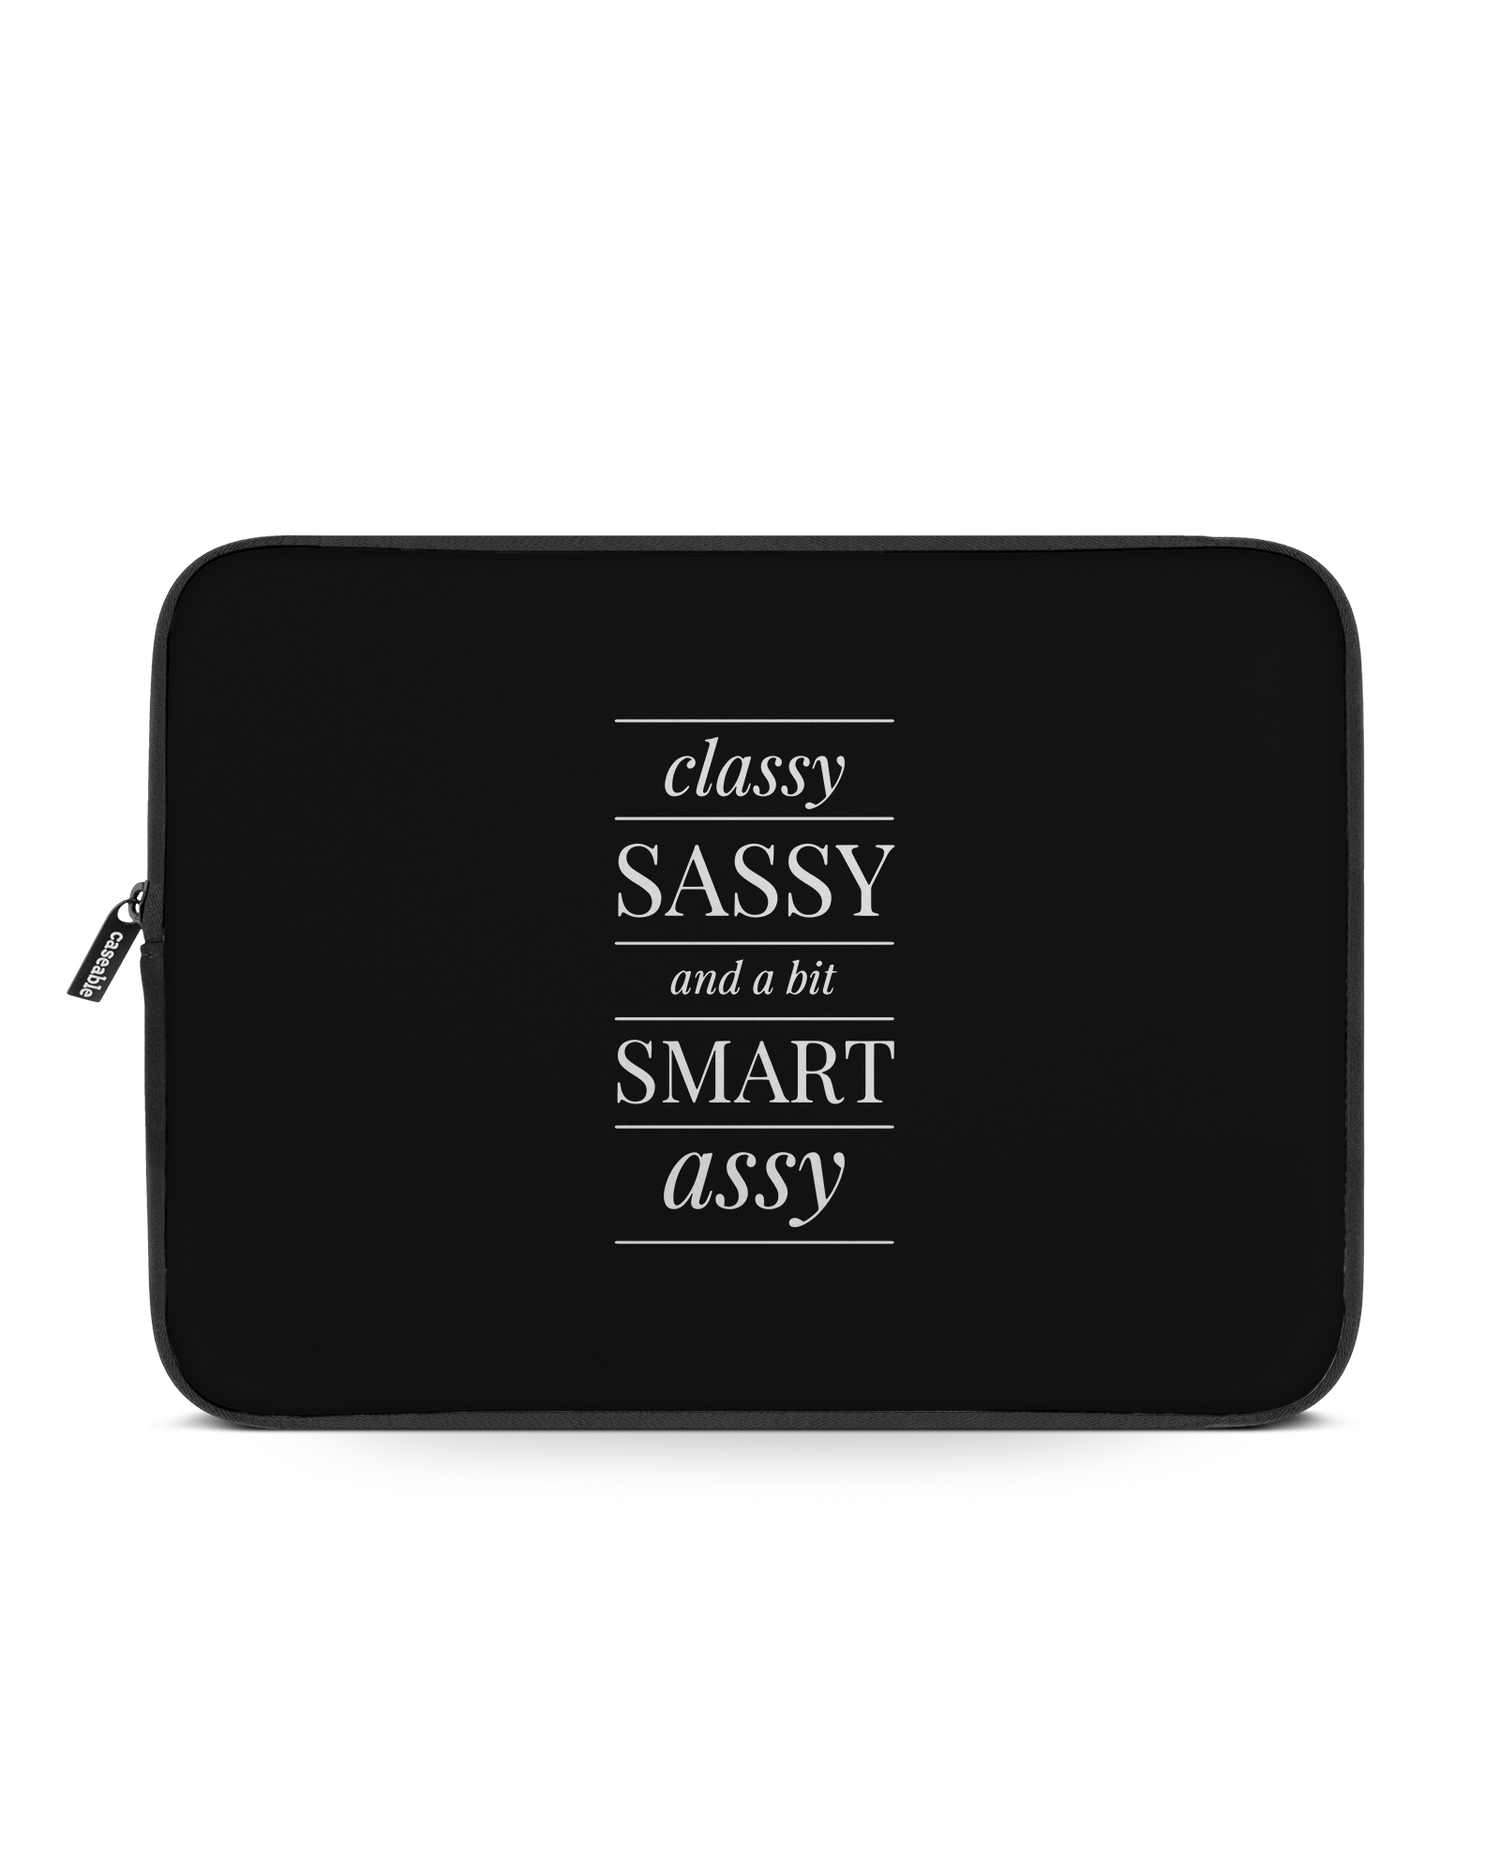 Classy Sassy Laptophülle 15 Zoll: Vorderansicht